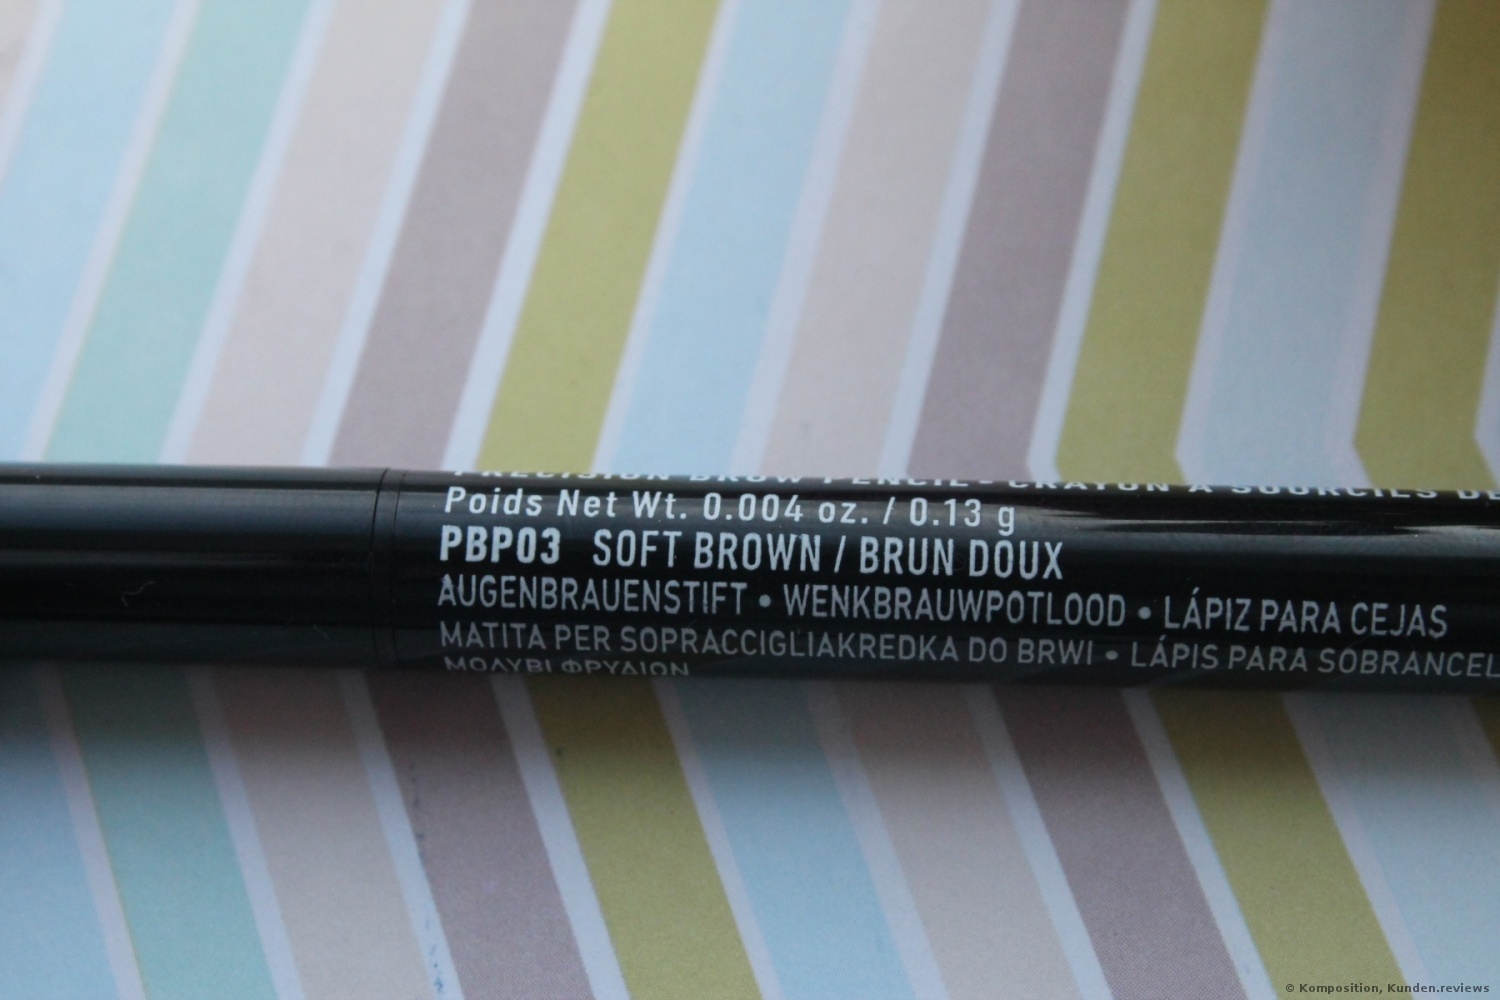 NYX Precision Brow Pencil in 03 Soft Brown